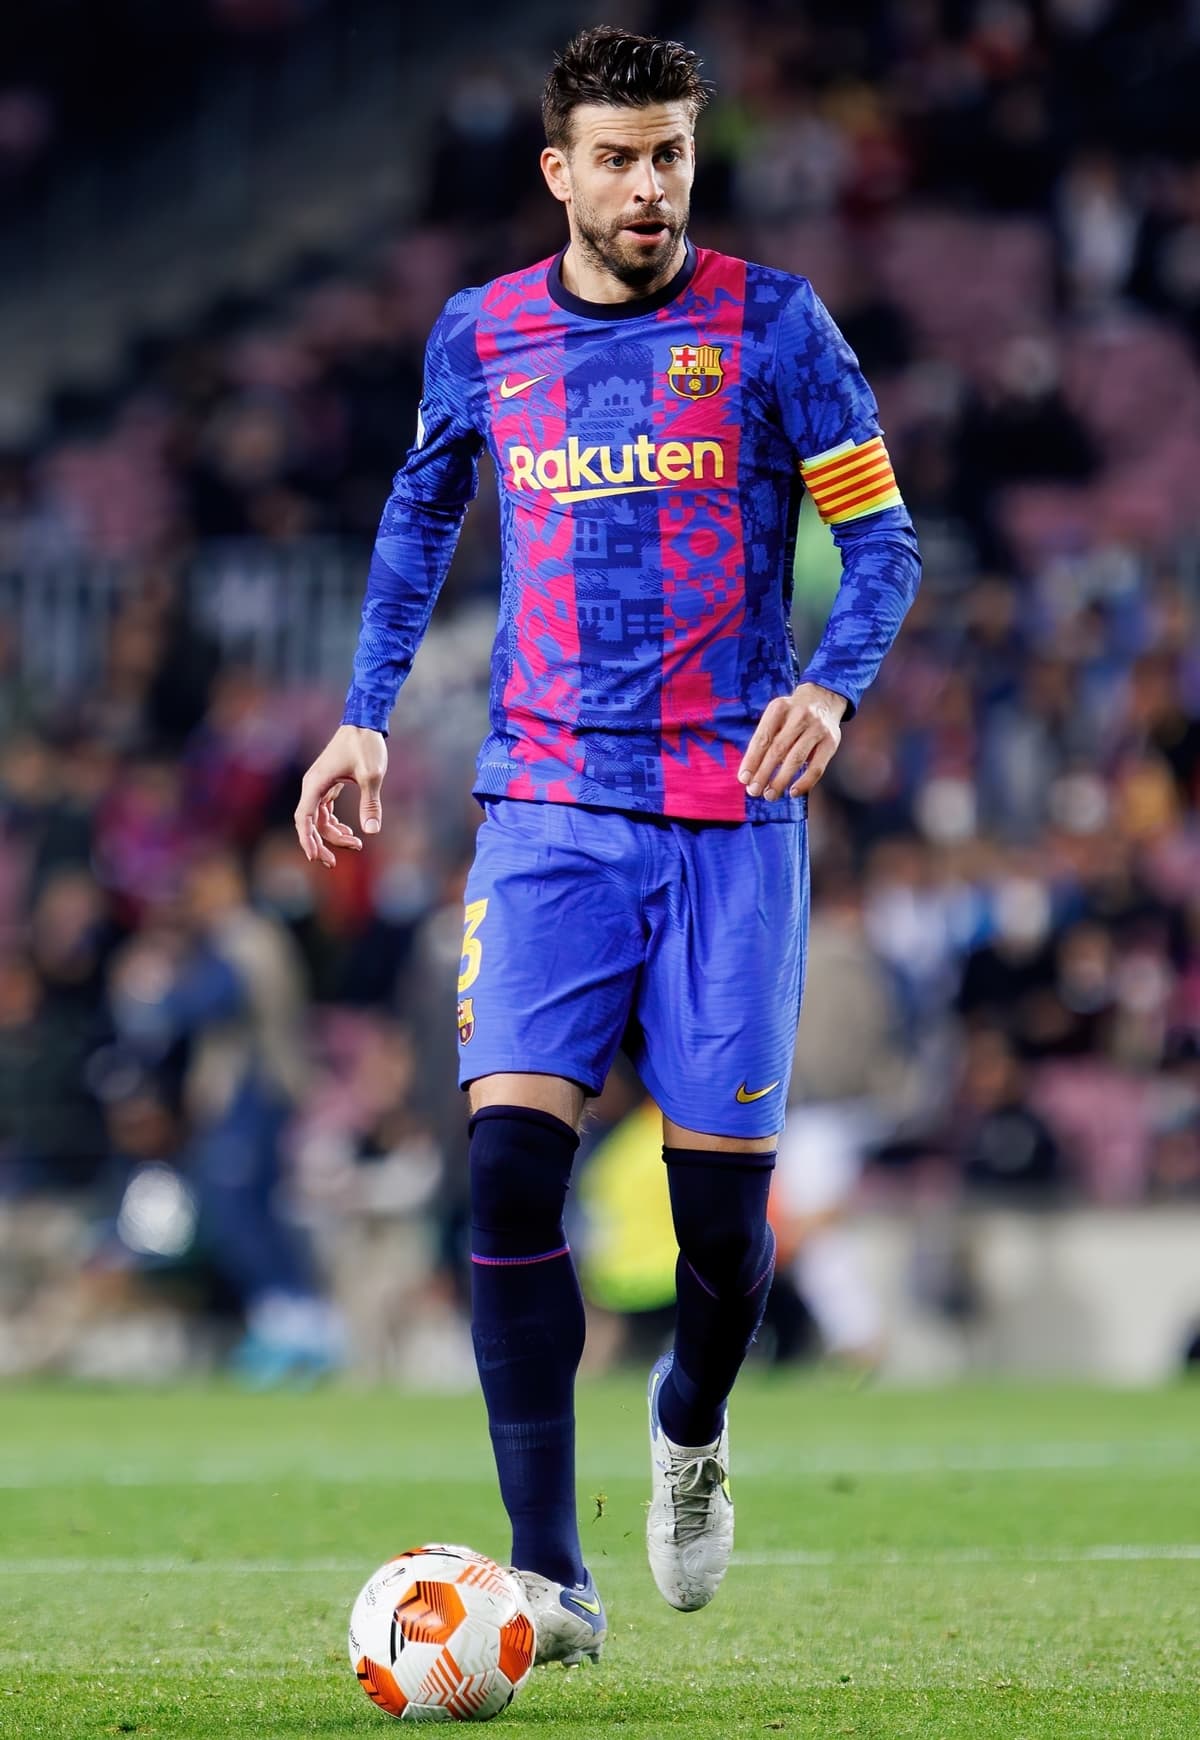 Spanish professional footballer Gerard Piqué Bernabeu plays as a center-back for La Liga club Barcelona